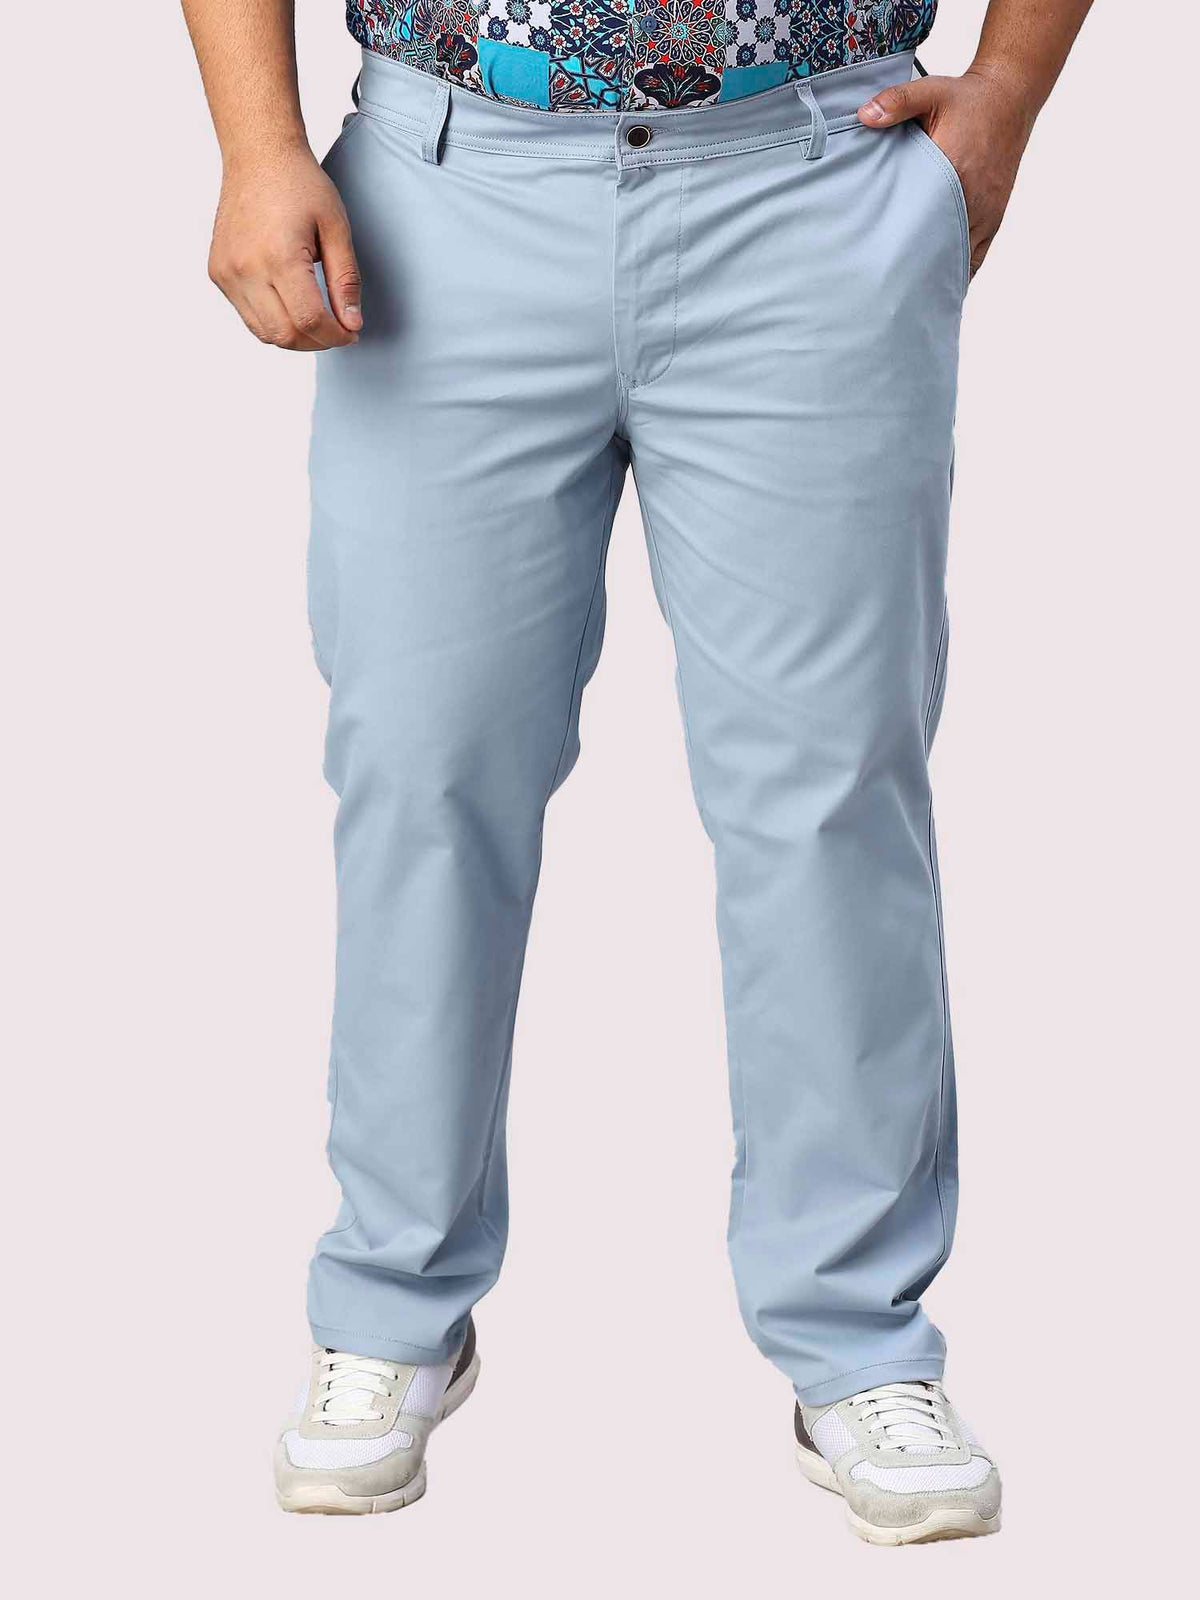 Aqua Blue Solid Cotton Trouser Men's Plus Size - Guniaa Fashions